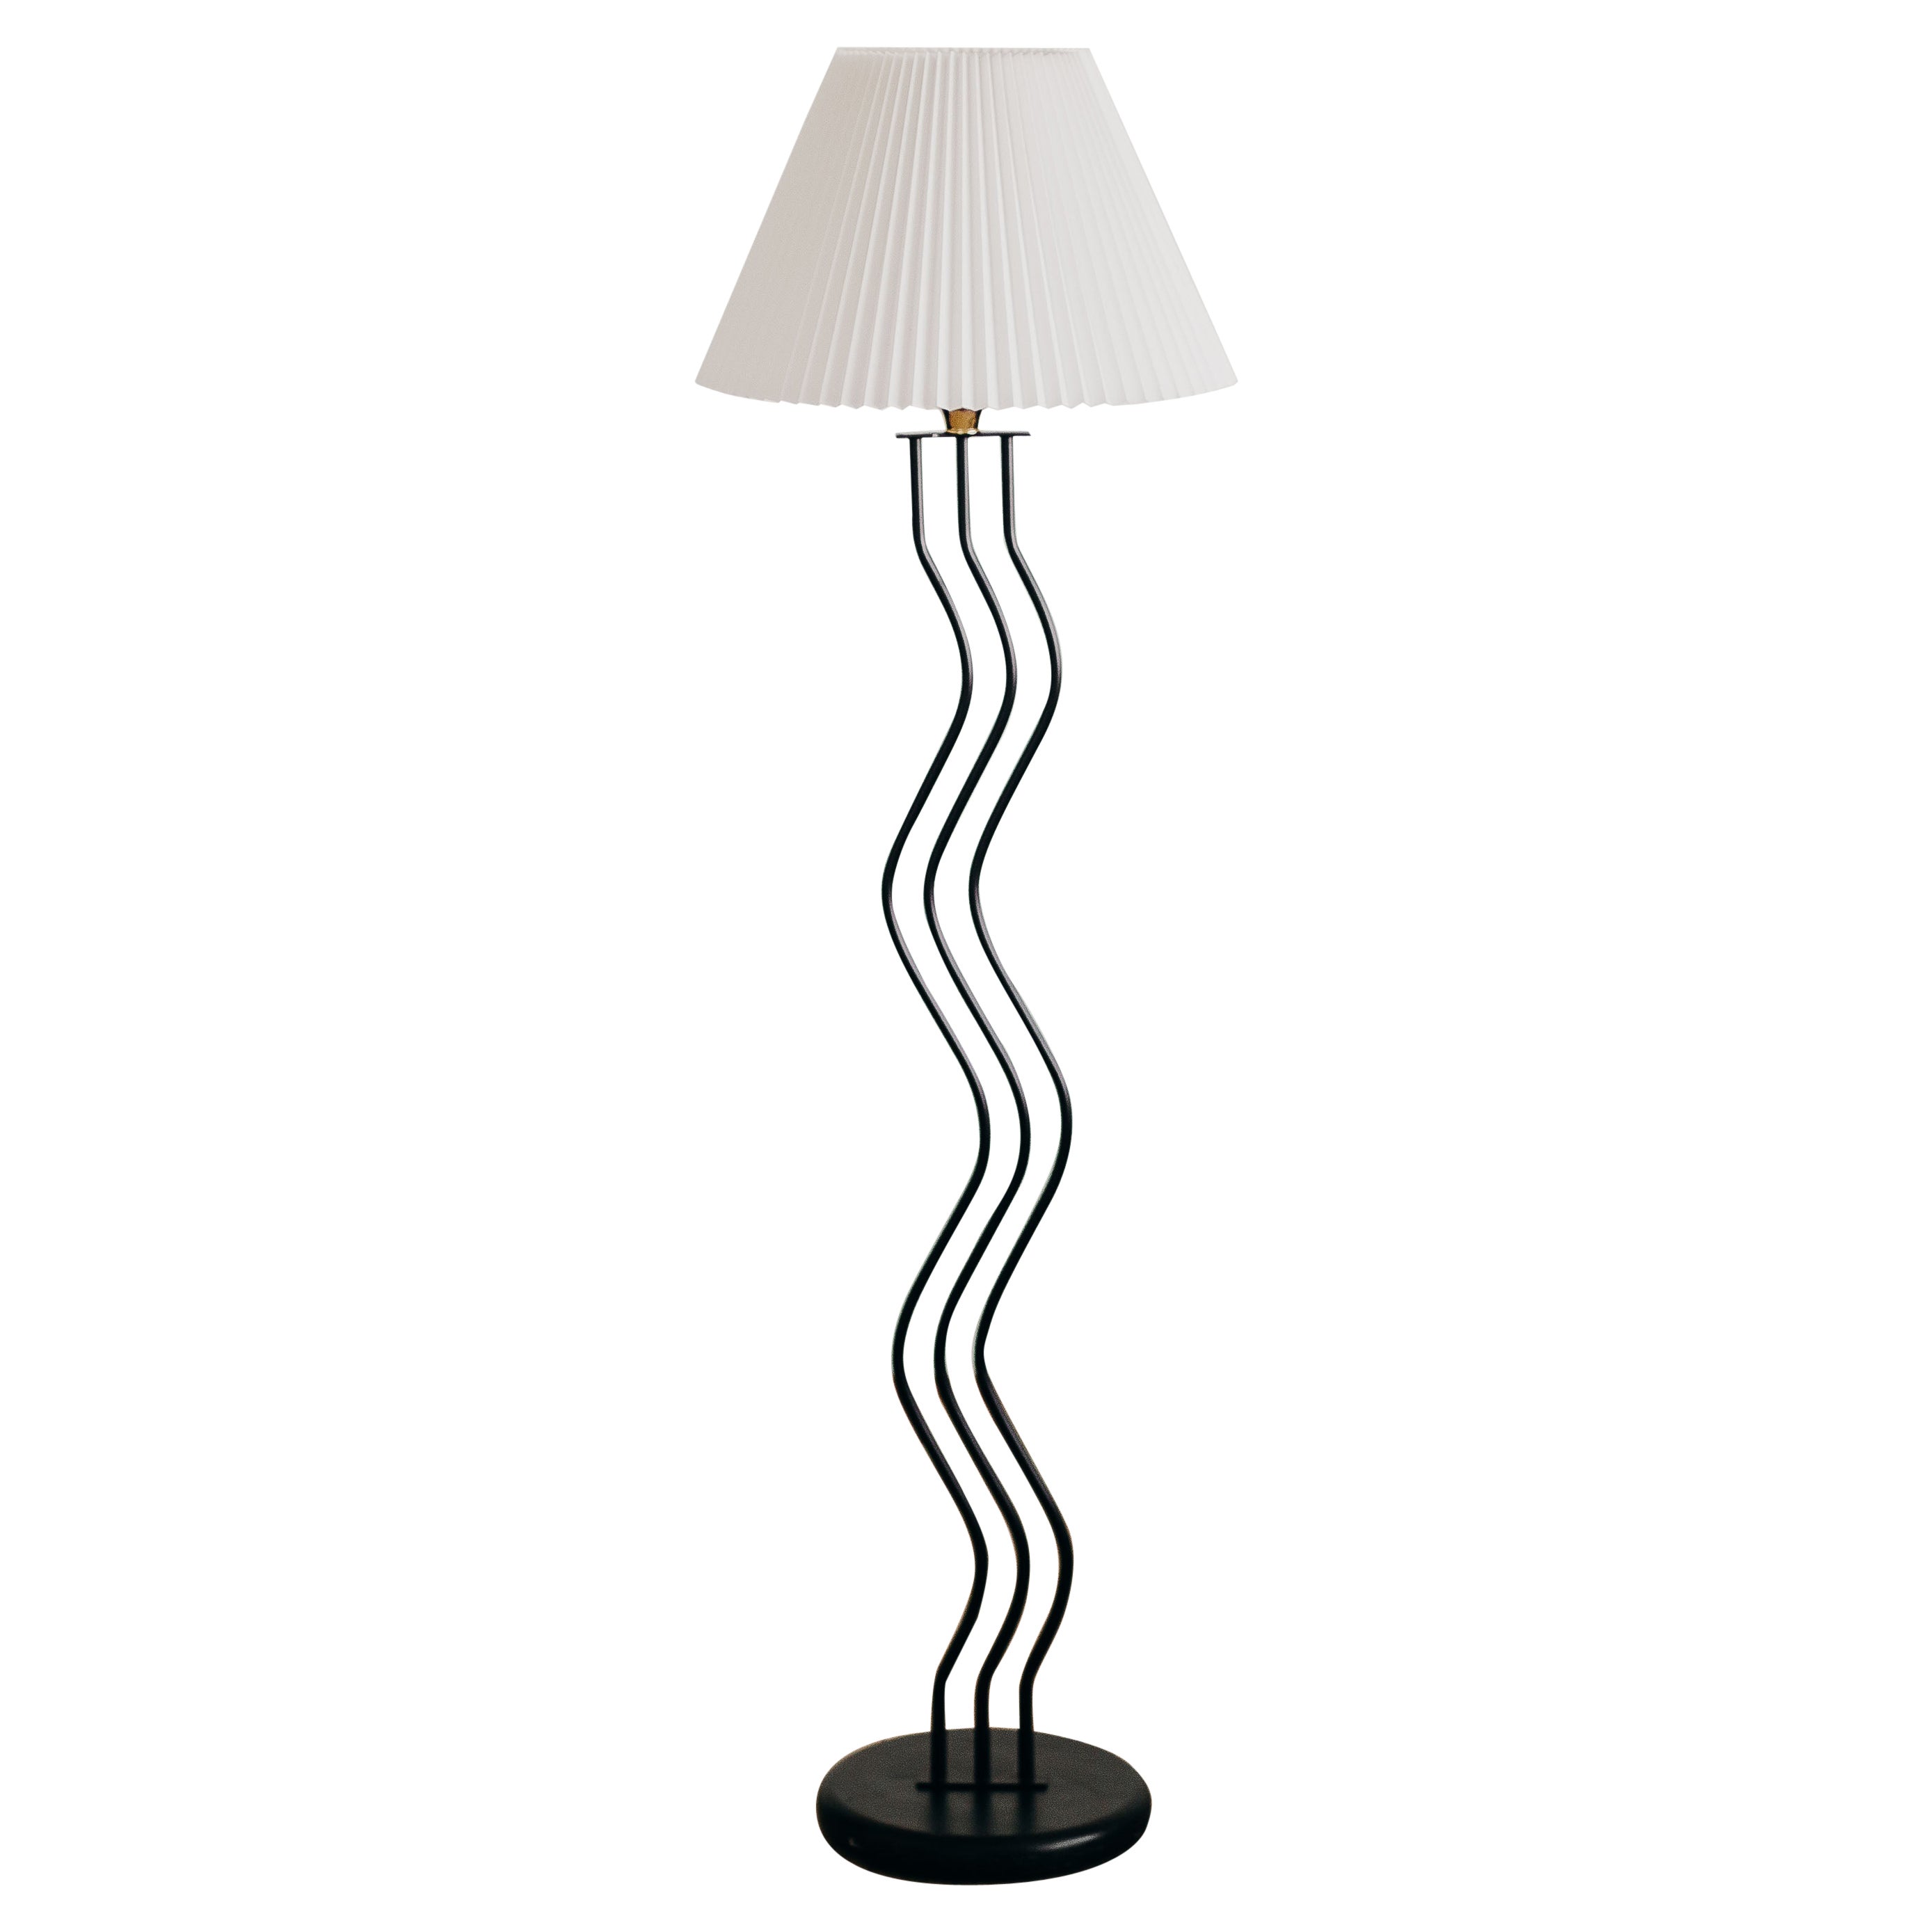 Post Modern Memphis Style Black Squiggle Floor Lamp